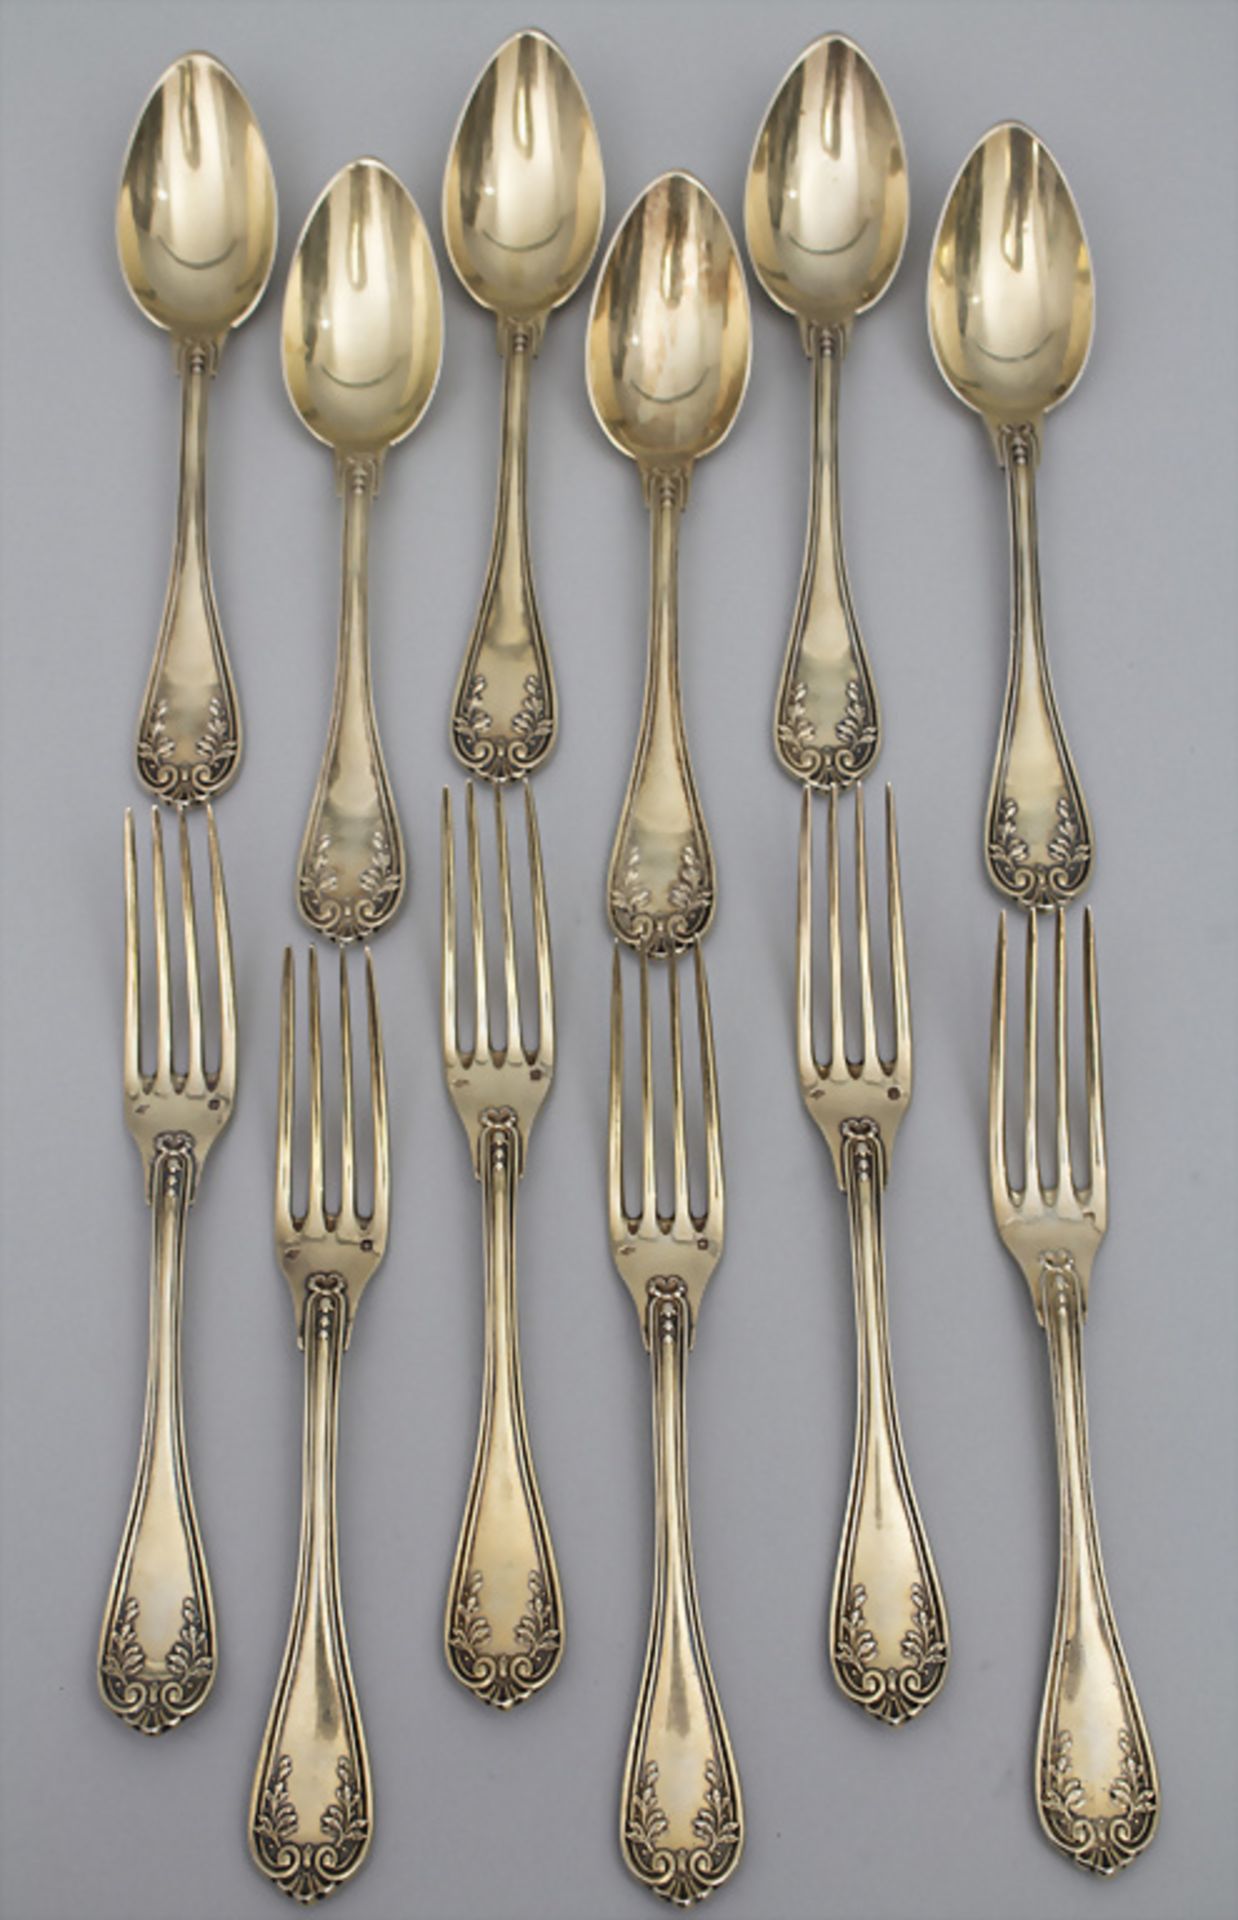 12-teiliges Silberbesteck / A 12-part silver cutlery, Veyrat, Paris, um 1900